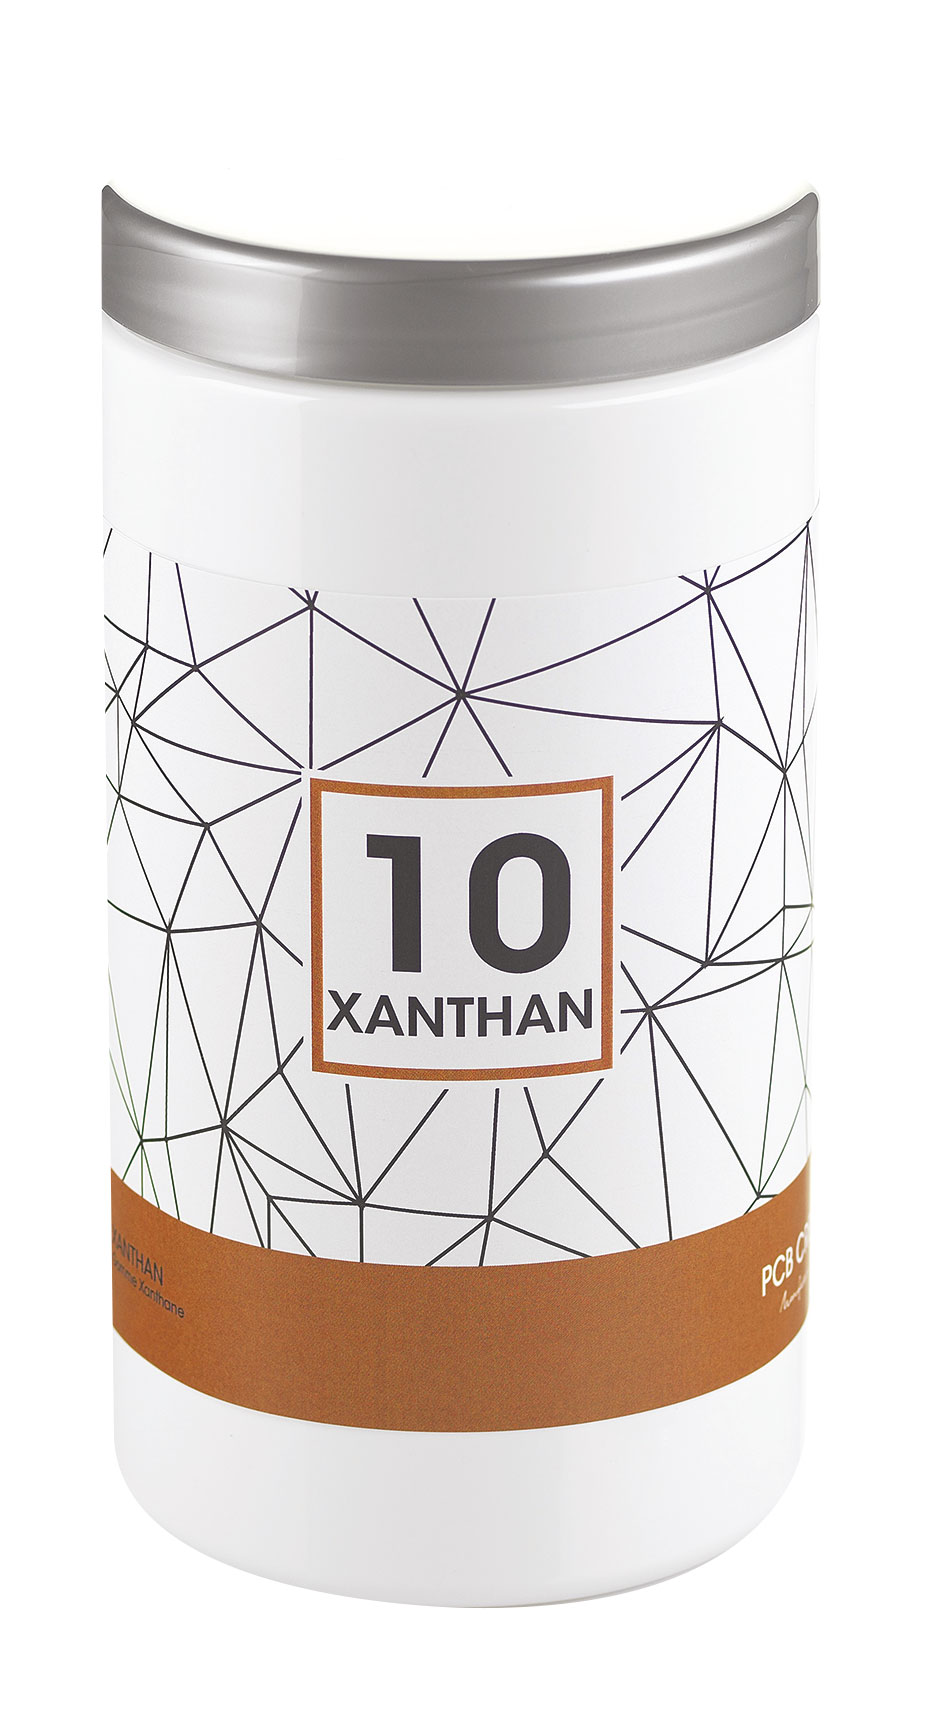 Xanthan N° 10 (Xanthan gum)